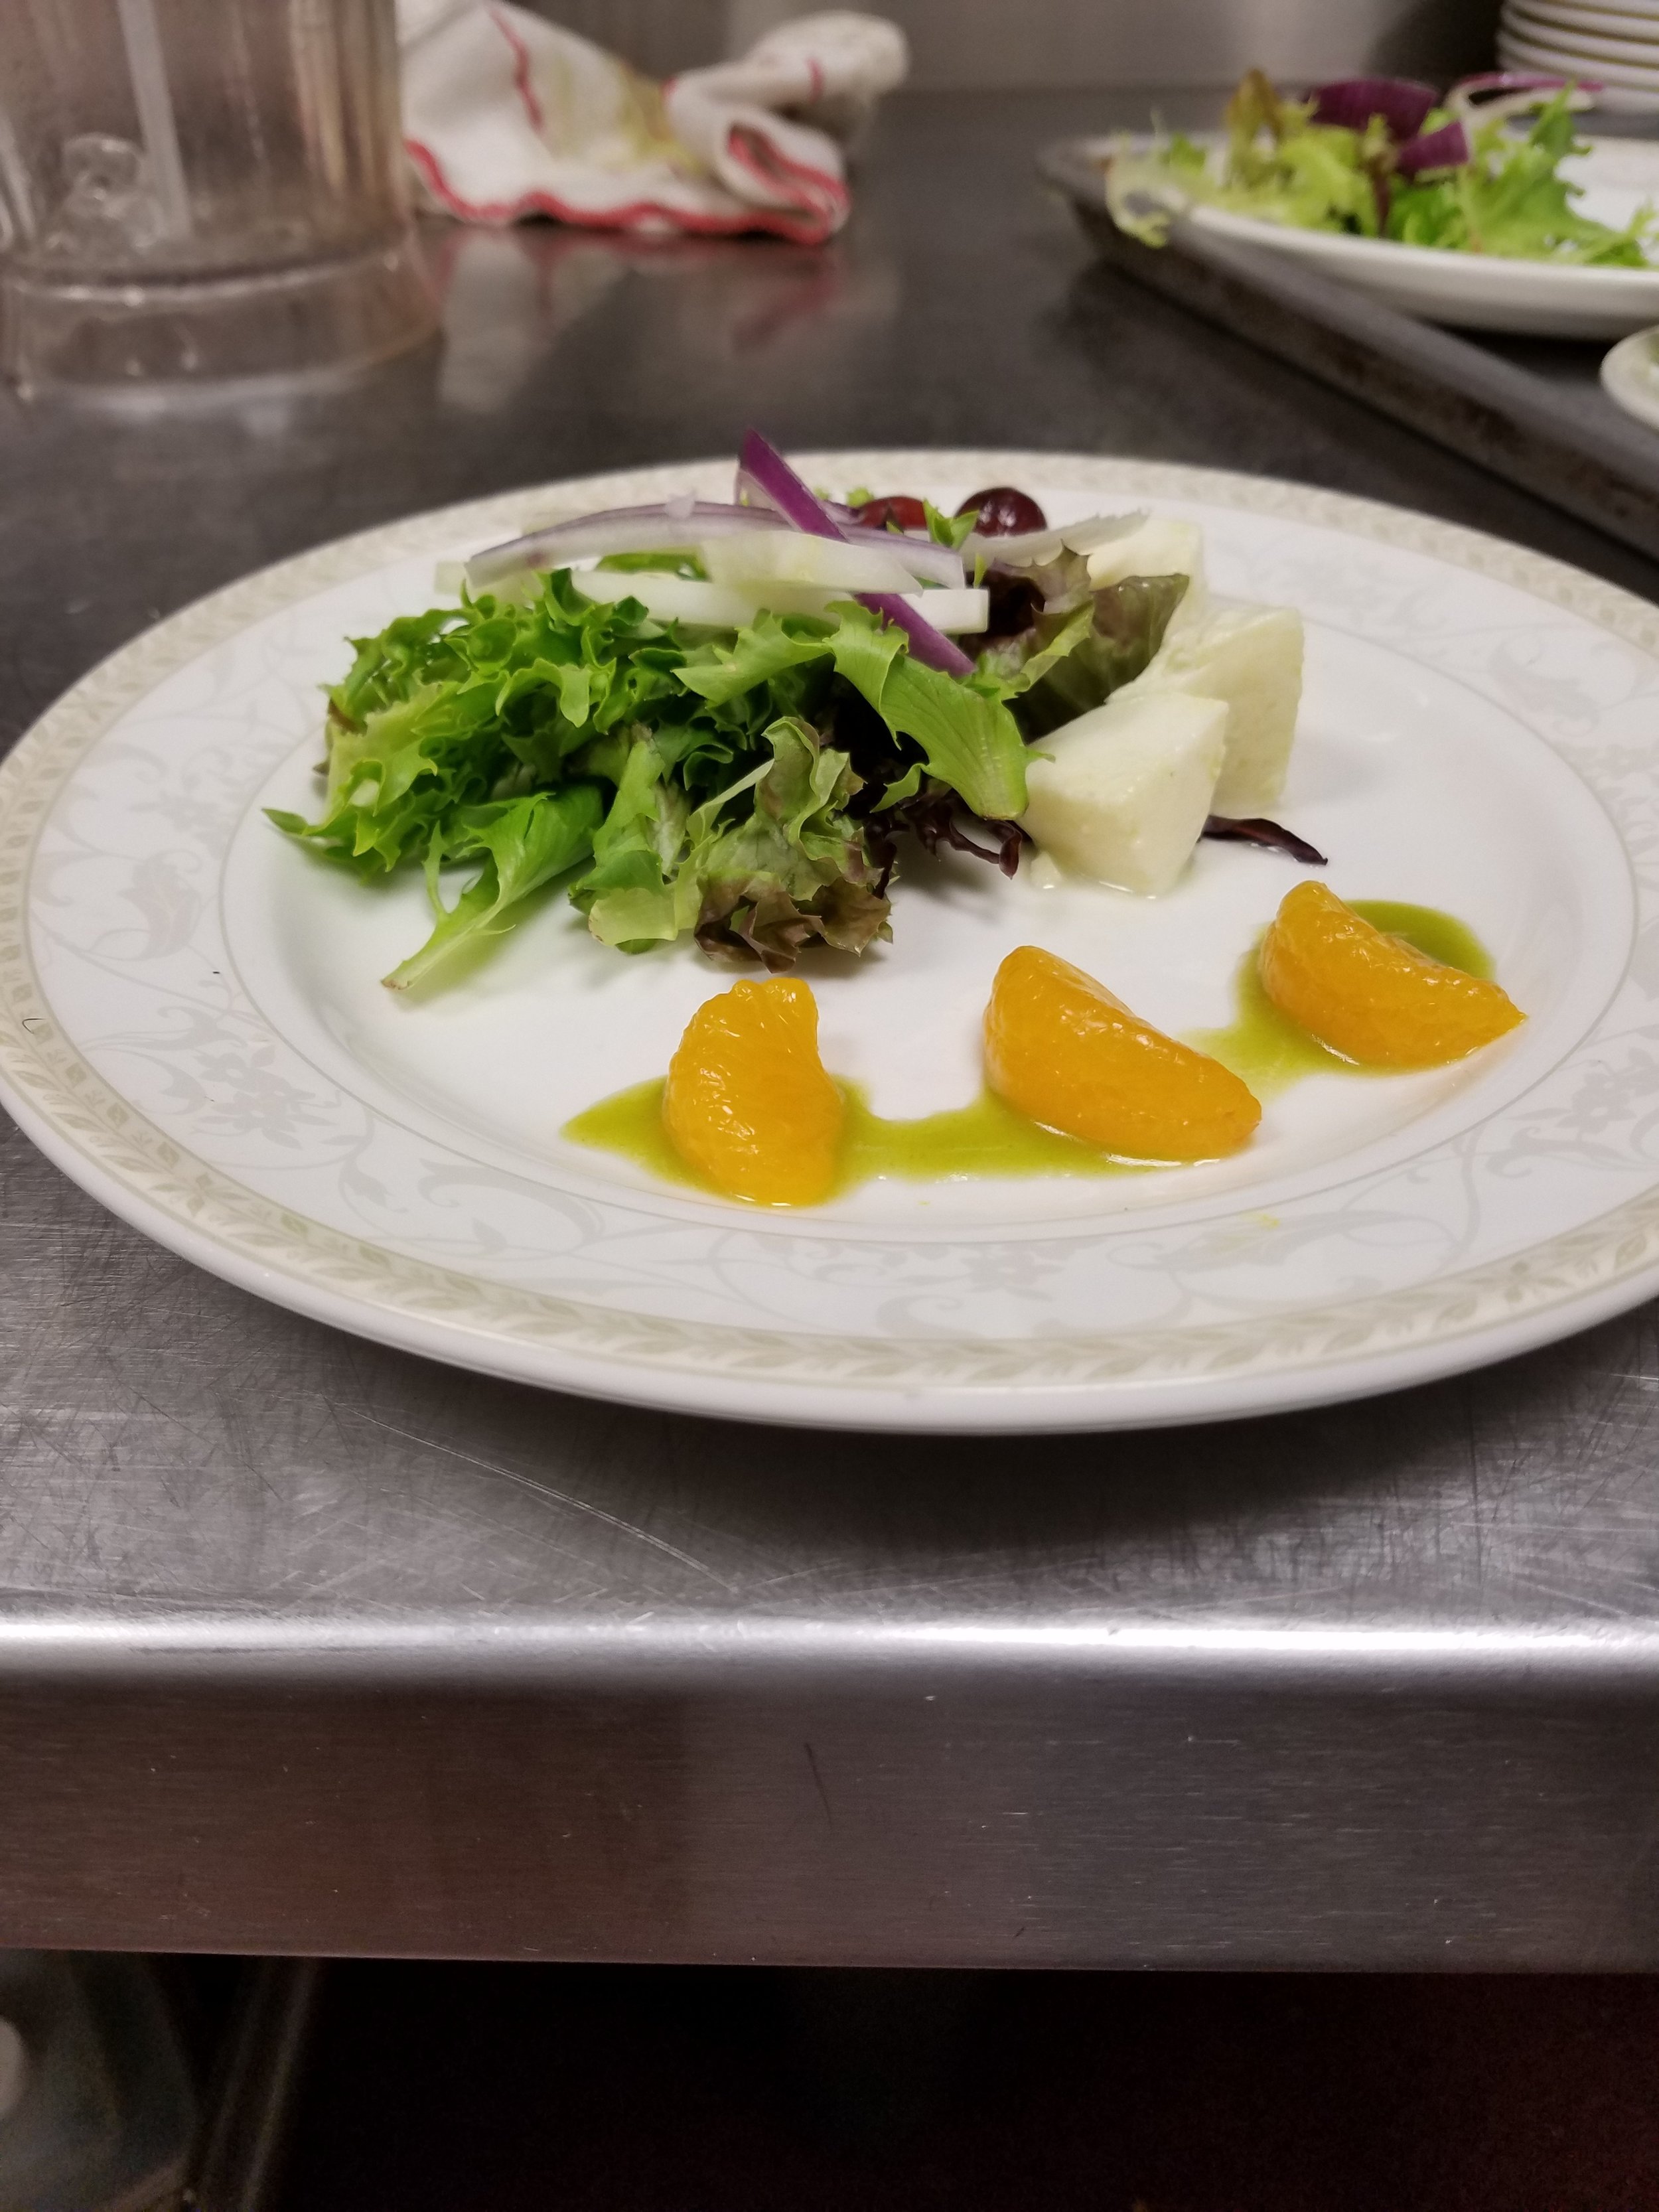 Show Plate - Fennel Salad with Manderin Orange Slices.jpg